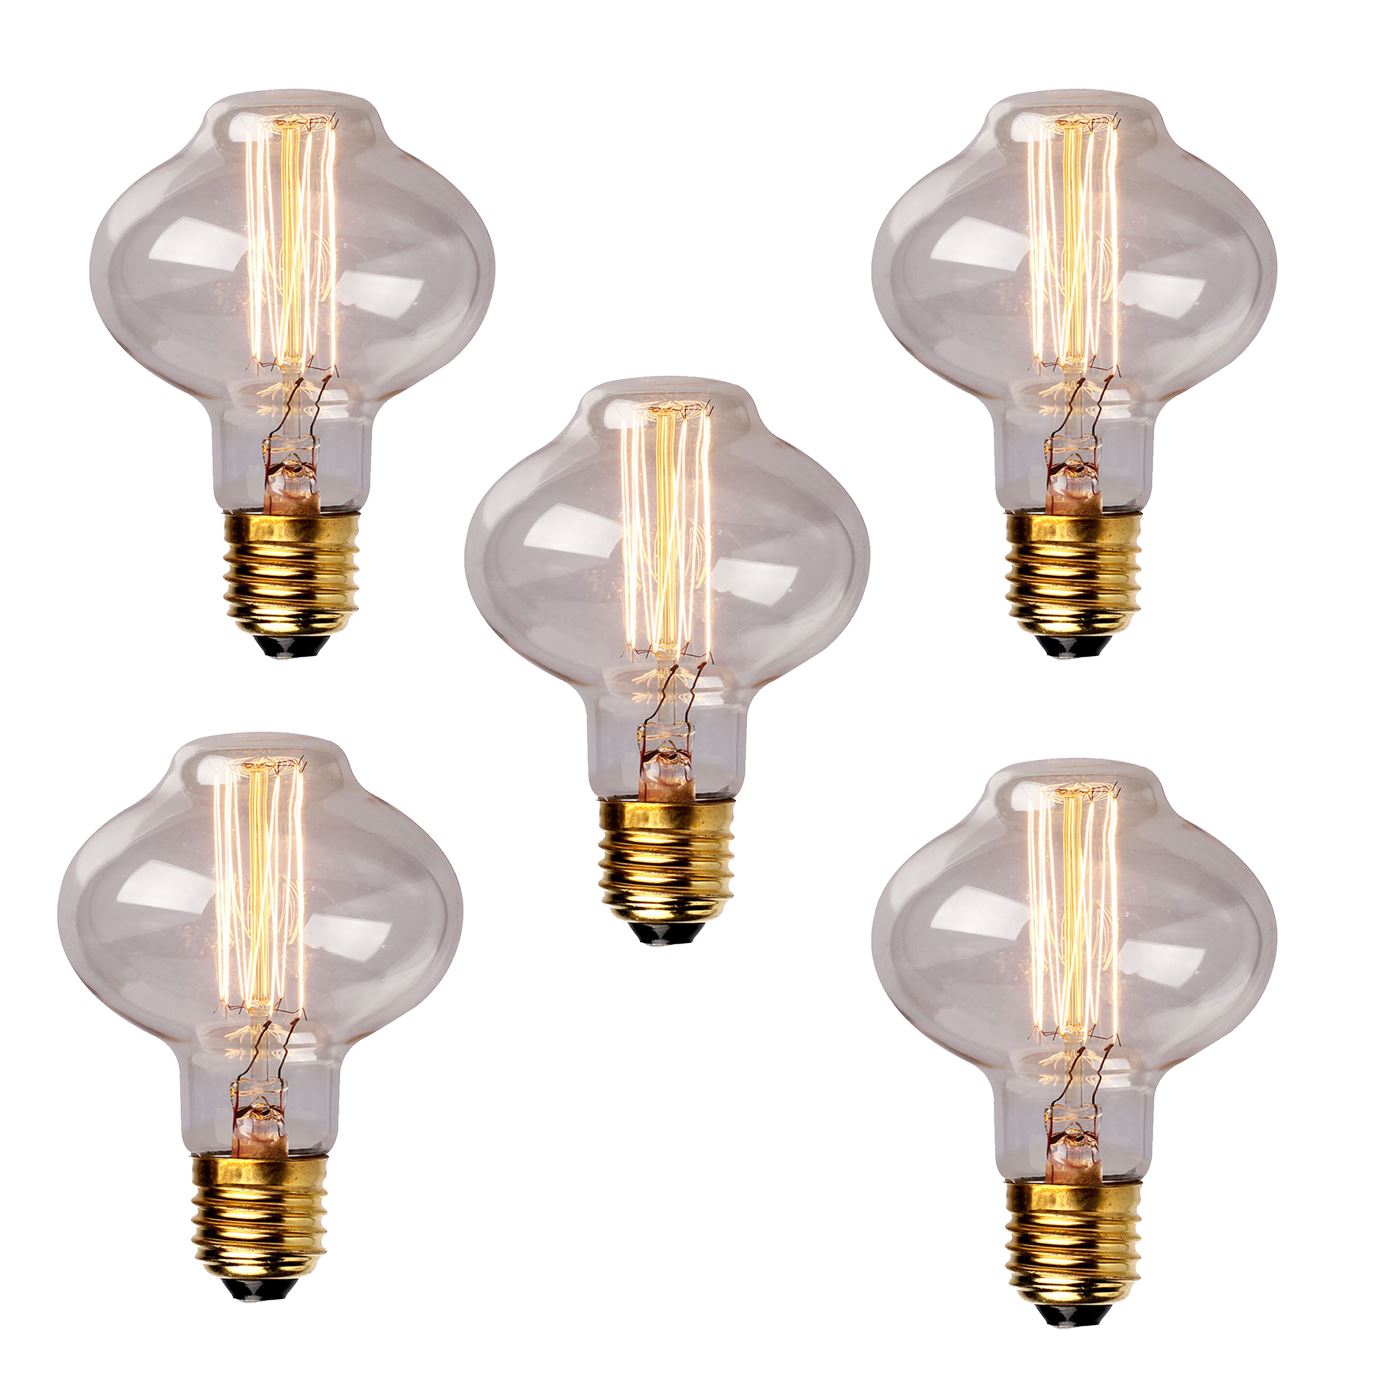 Pilz Edison Glühbirne 60W E27 Dimmbare Wohnkultur Vintage Filament Lampe